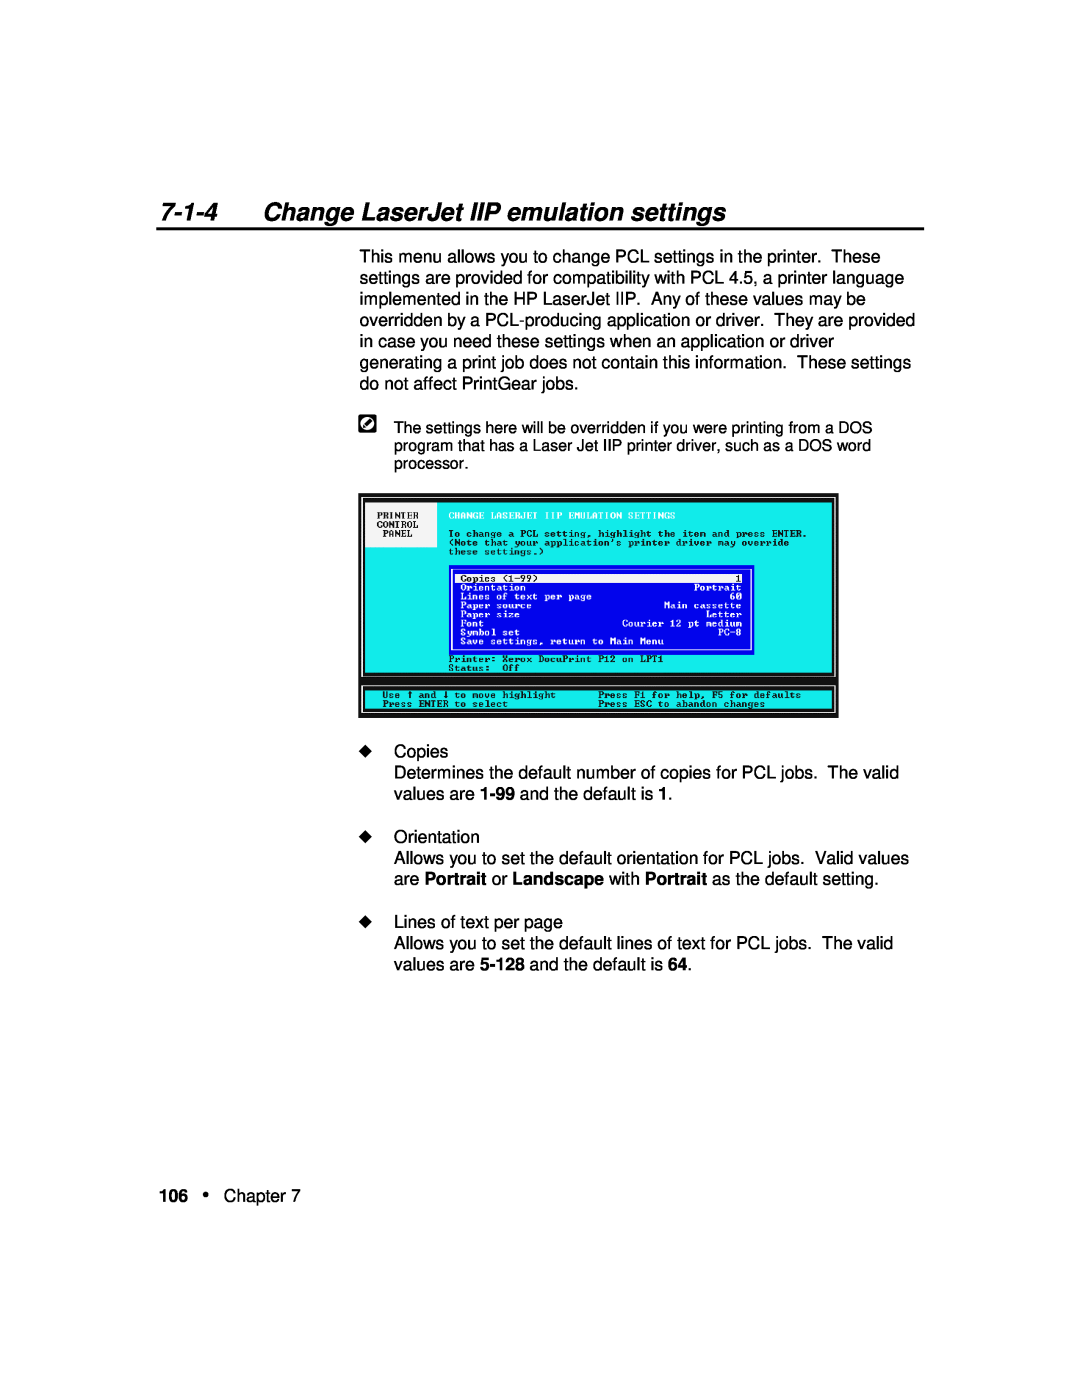 Xerox P12 manual Change LaserJet IIP emulation settings 